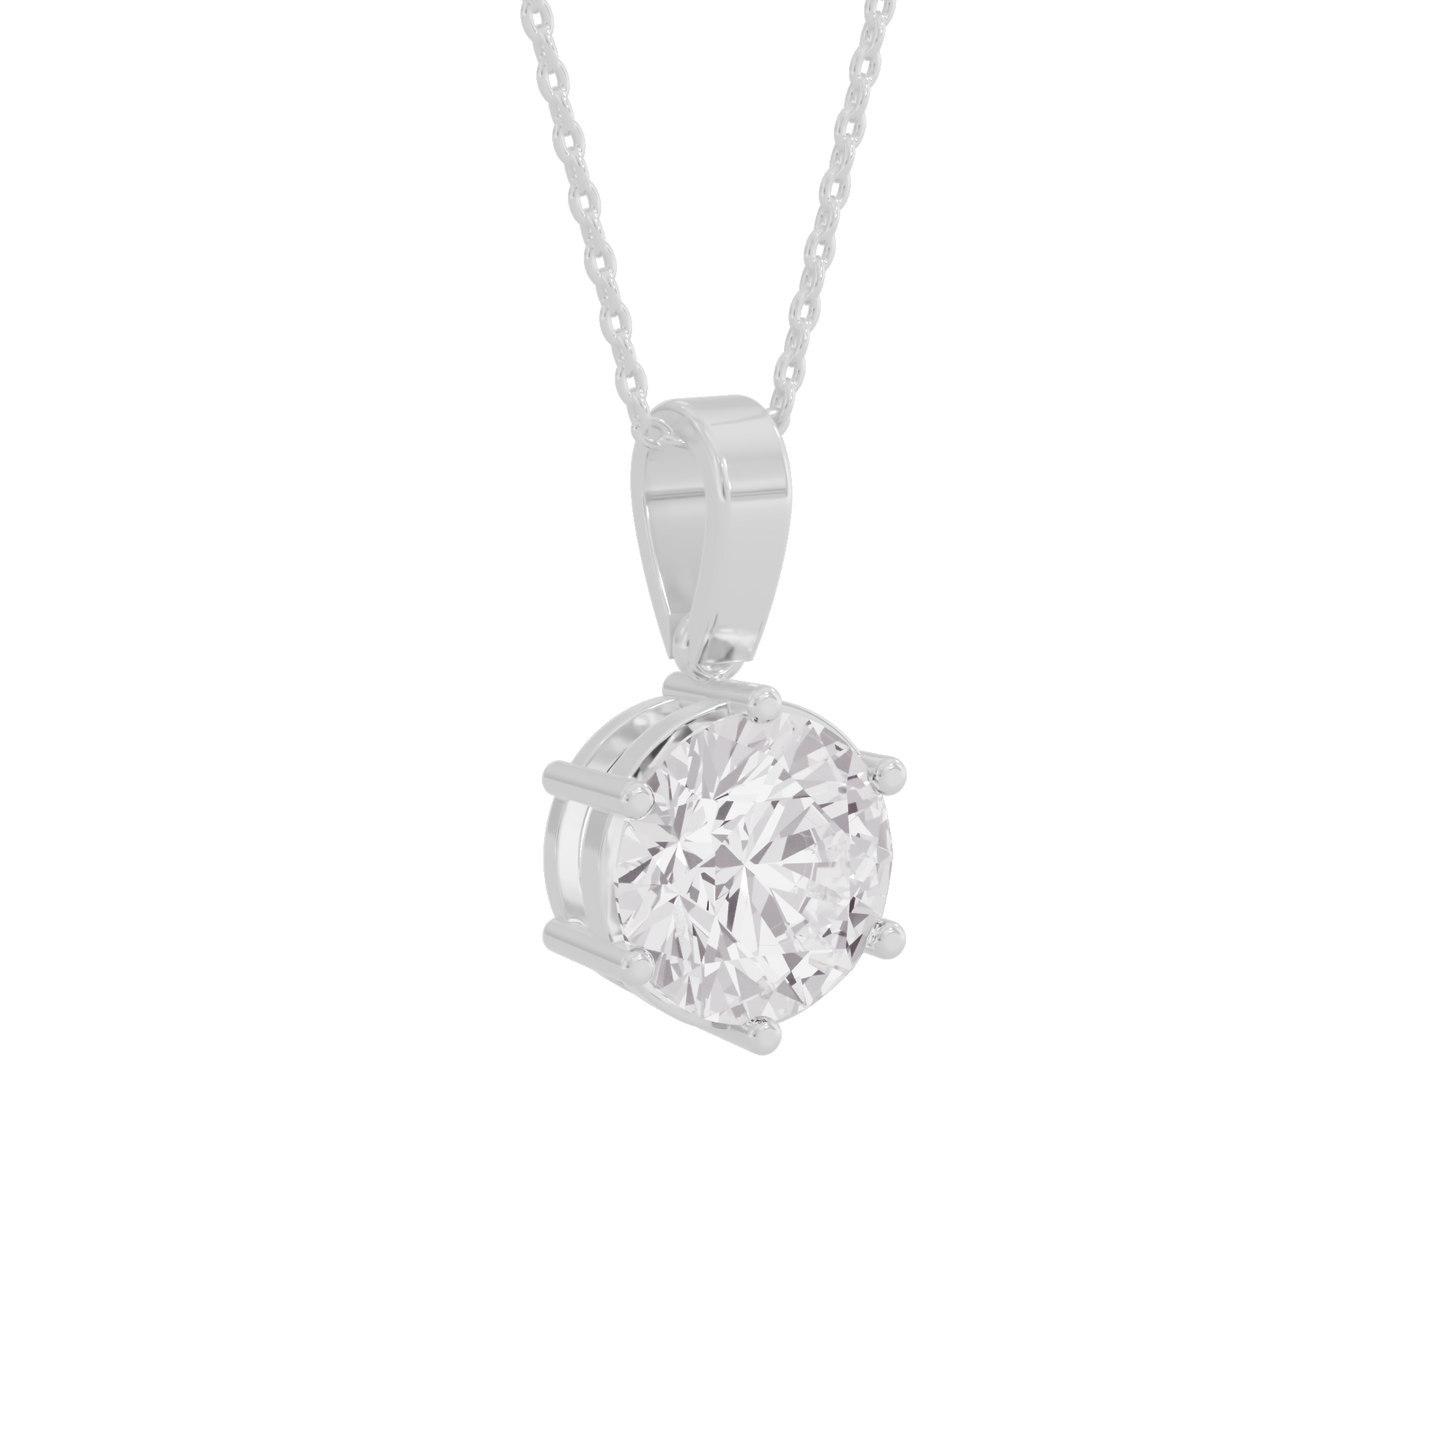 Celestial Charisma Diamond Pendant